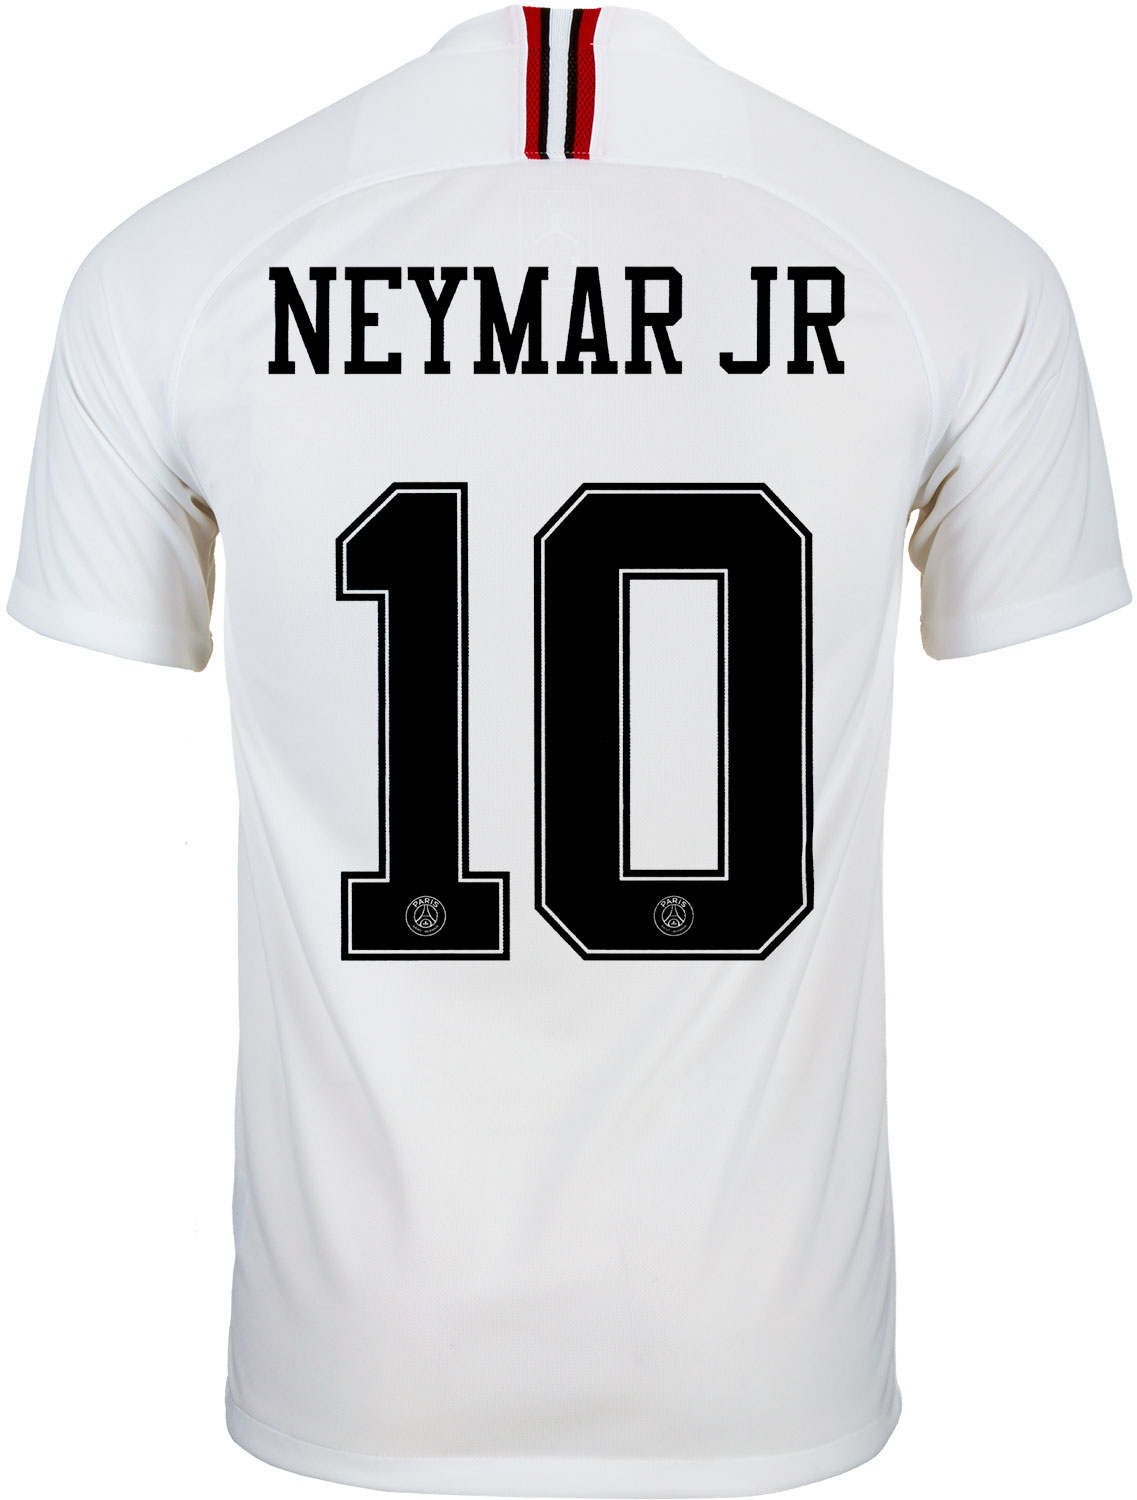 psg white jersey neymar